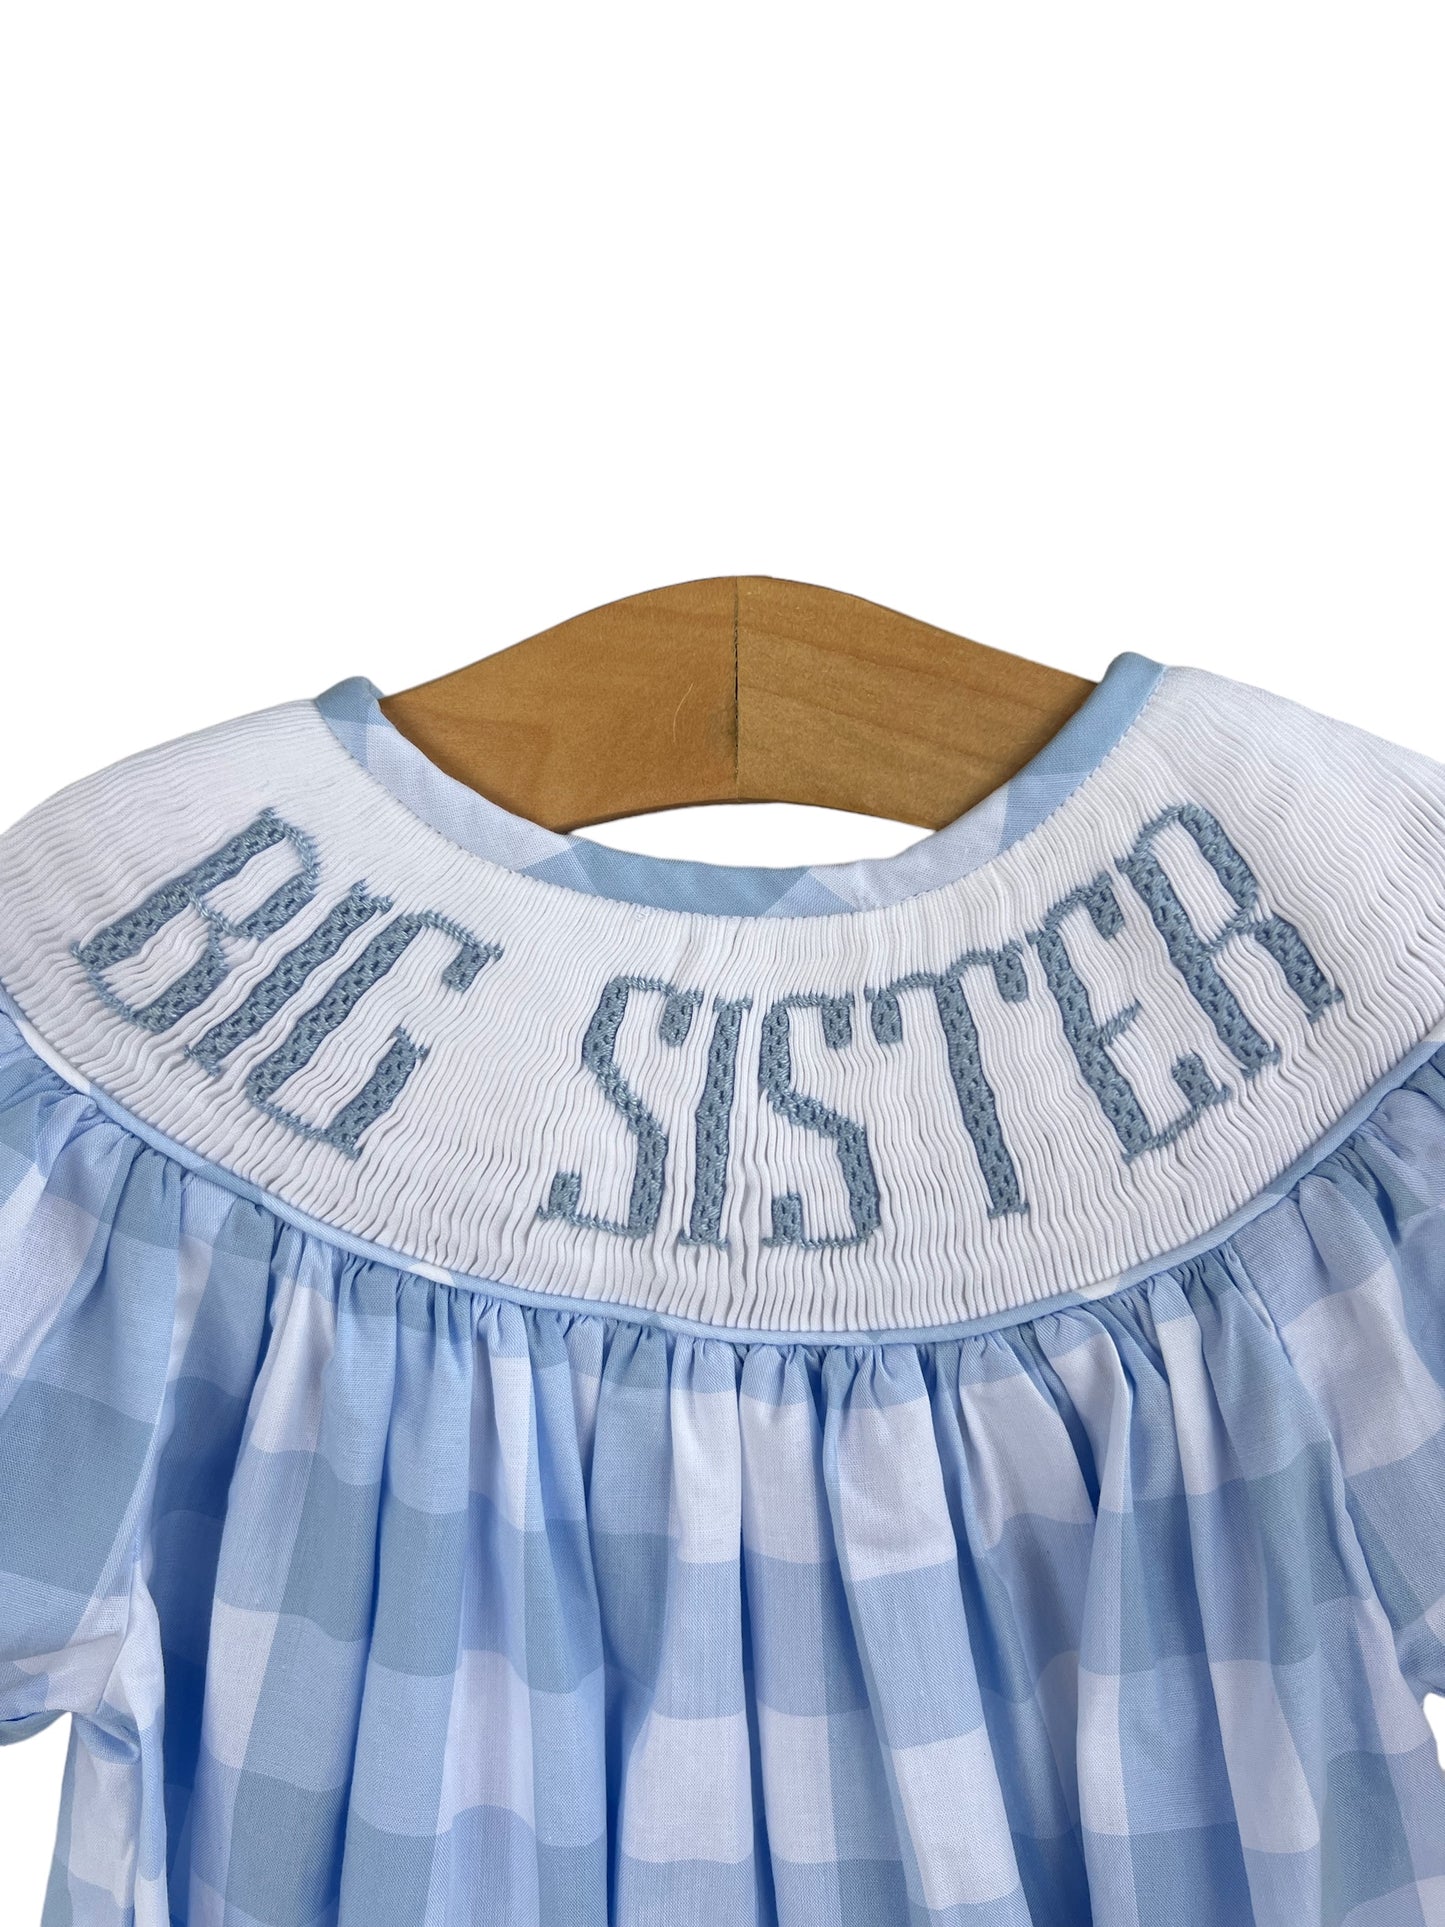 Big Sister Blue Gingham Dress